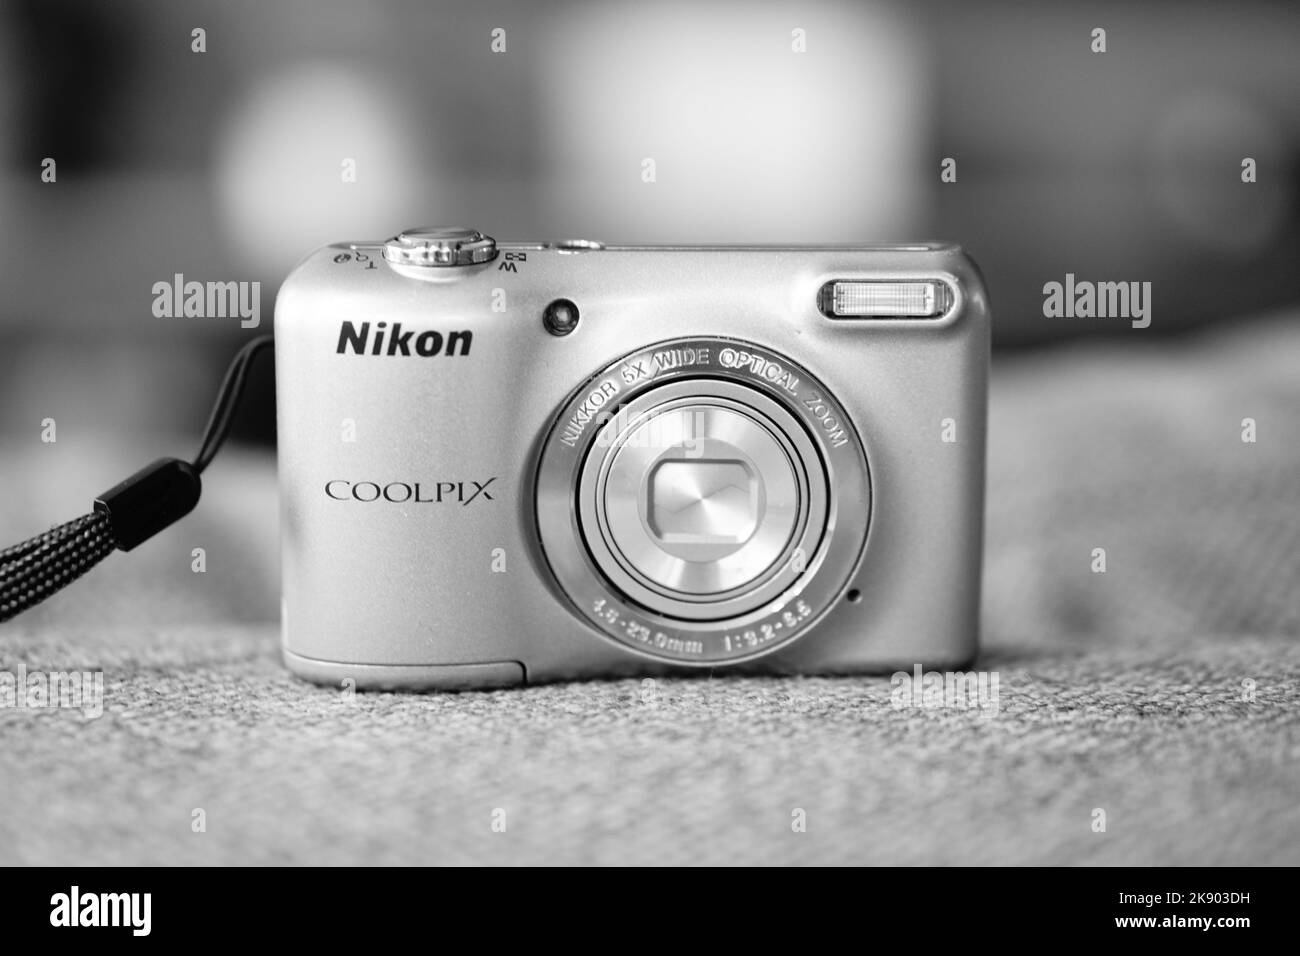 Nikon coolpix hi-res stock photography and images - Alamy